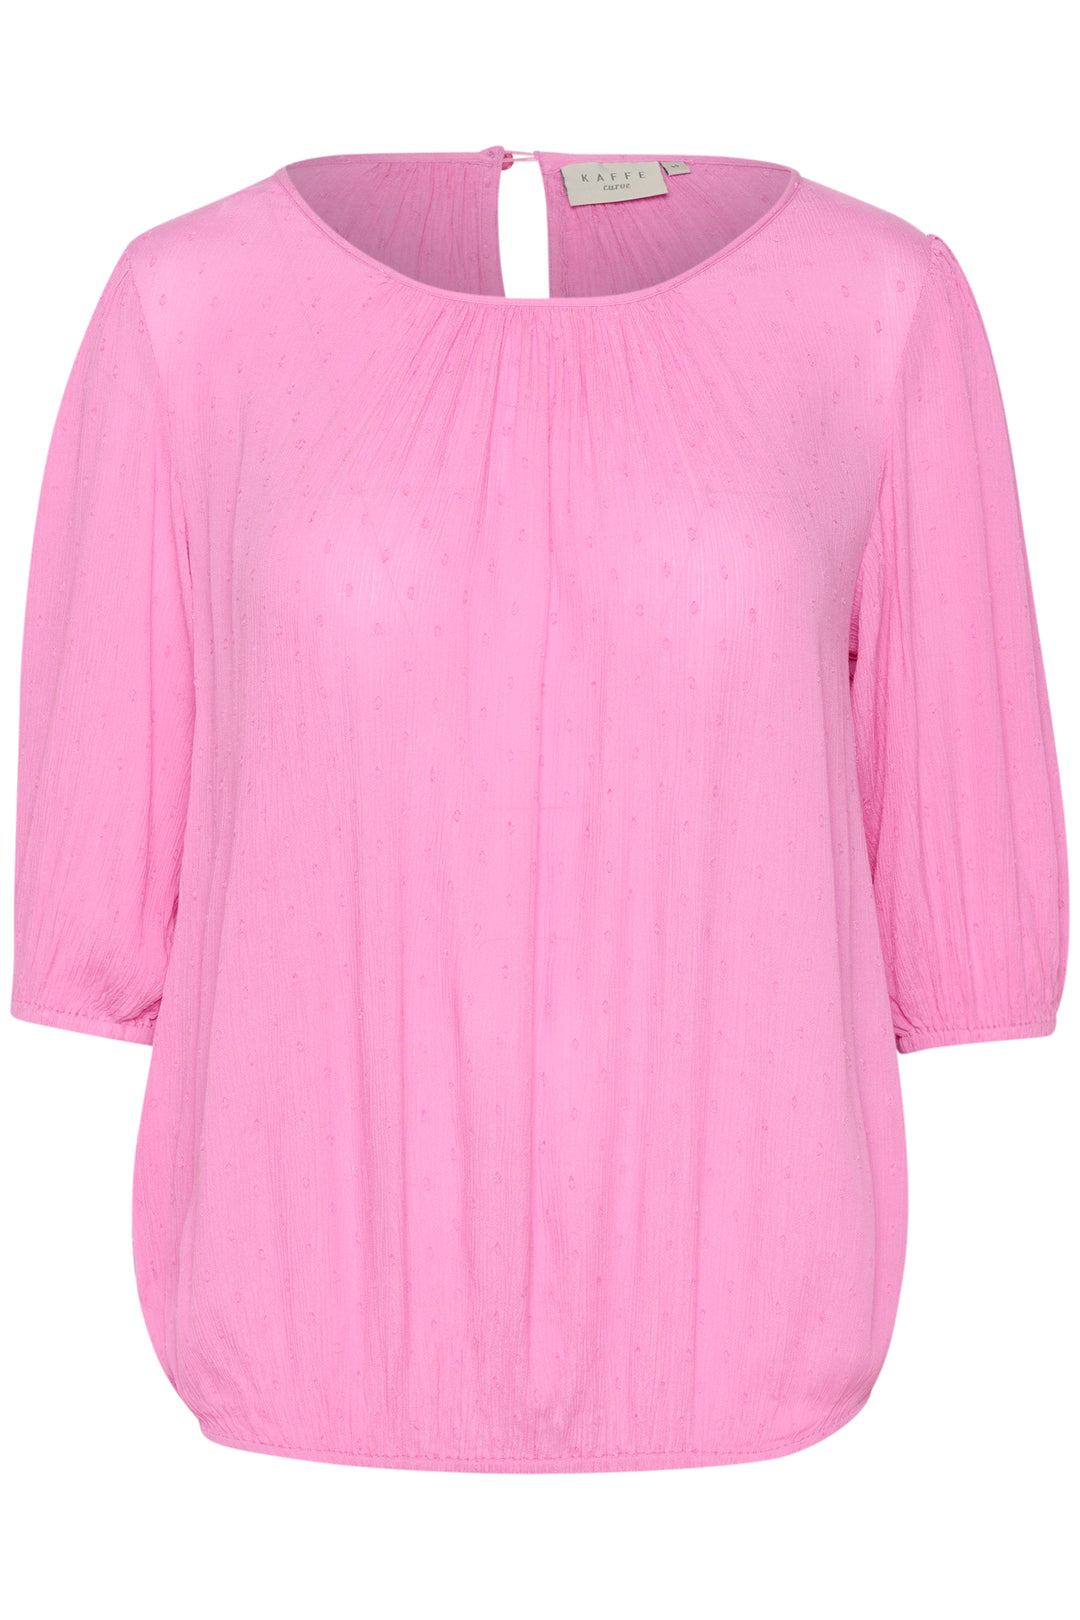 cyclamen blouse van ecovero viscose - kaffe curve - - grote maten - dameskleding - kledingwinkel - herent - leuven